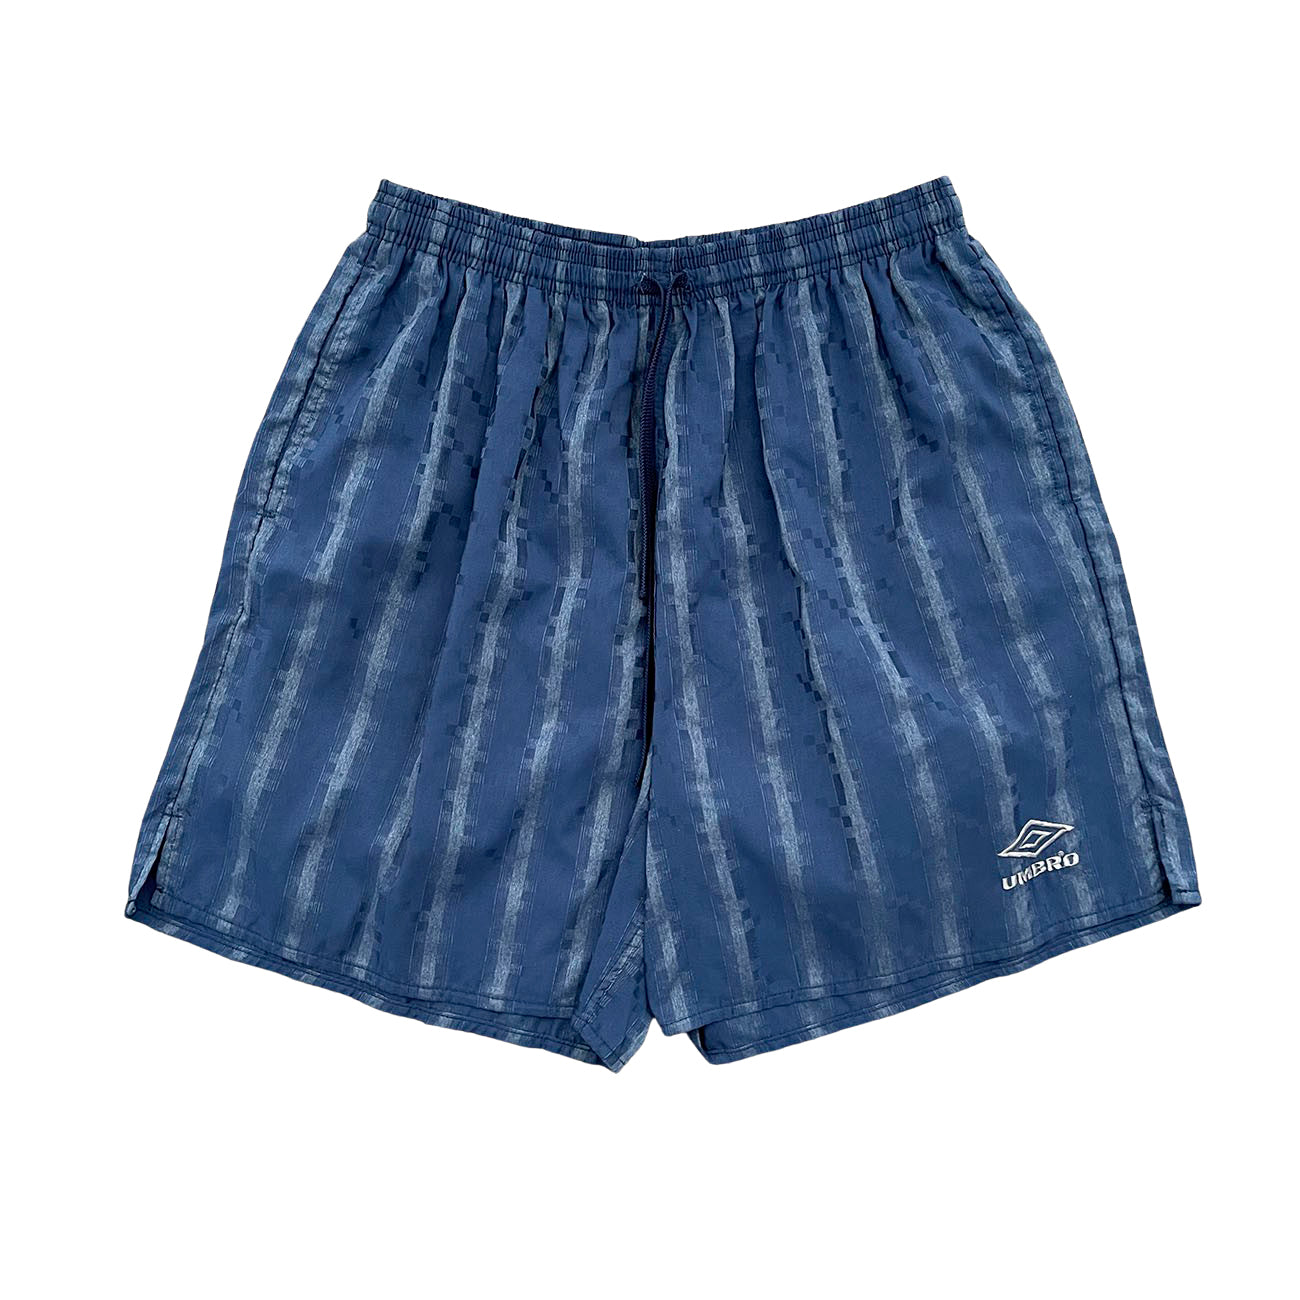 Umbro Shorts With Pockets - XL